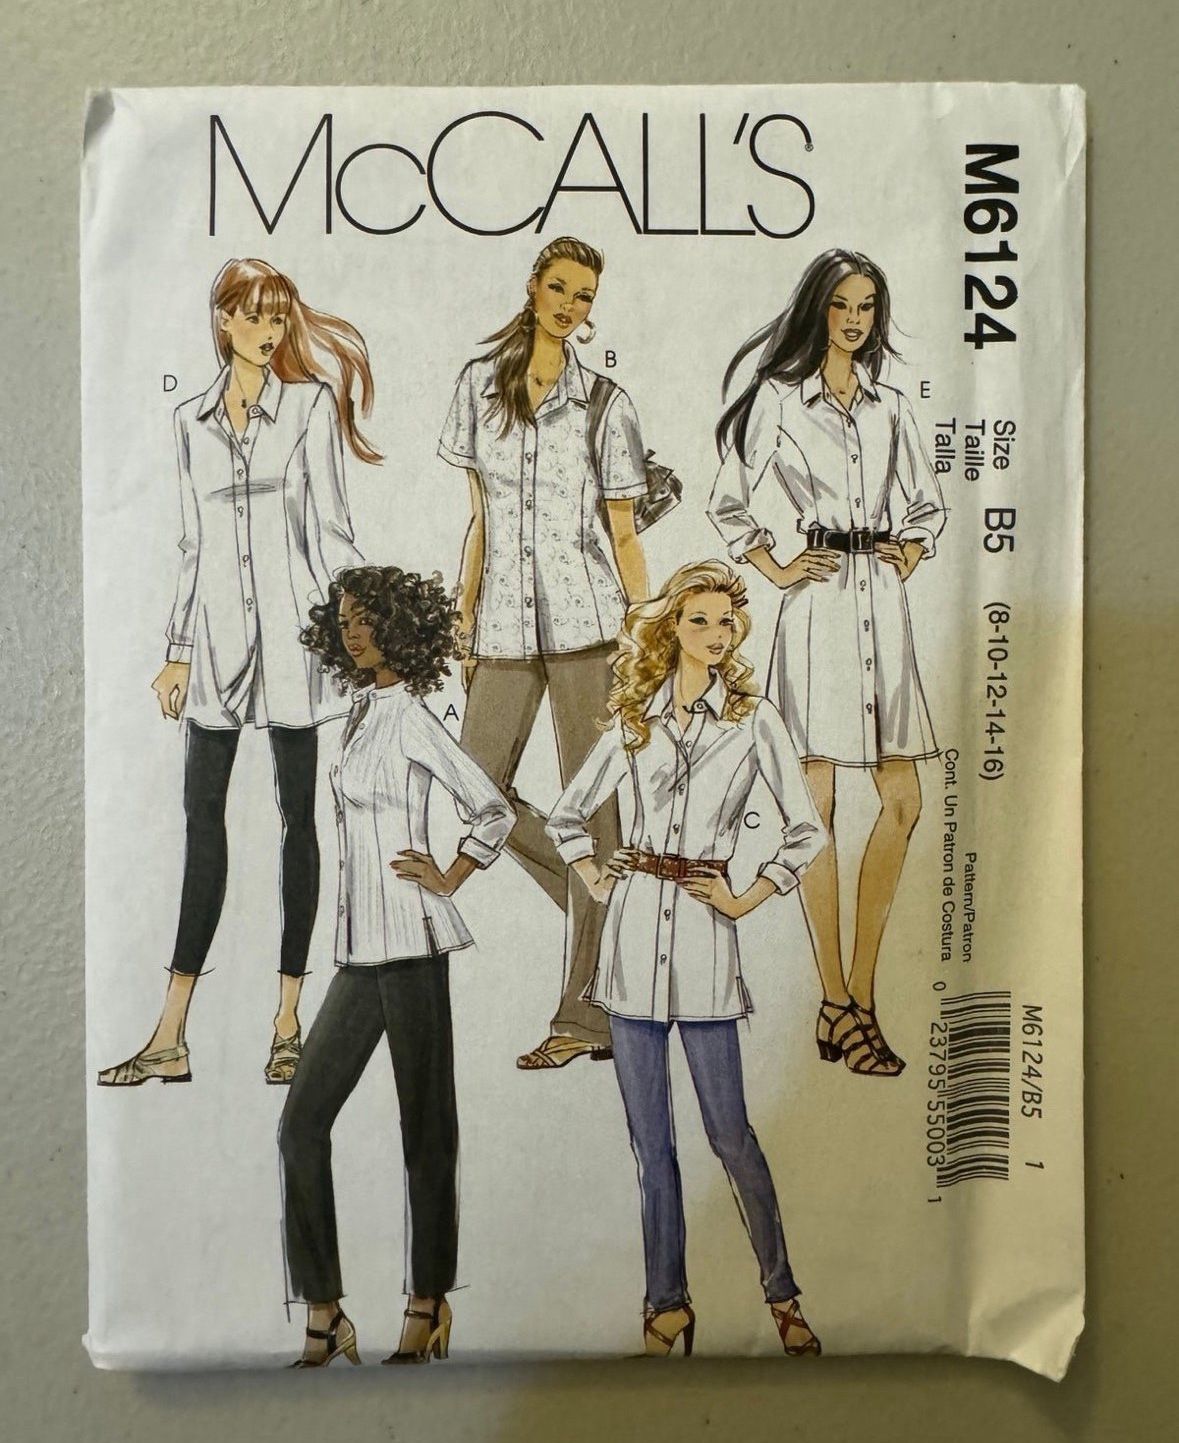 McCalls Sewing Pattern - Variety of Ladies Fashion Shirts (M6124)